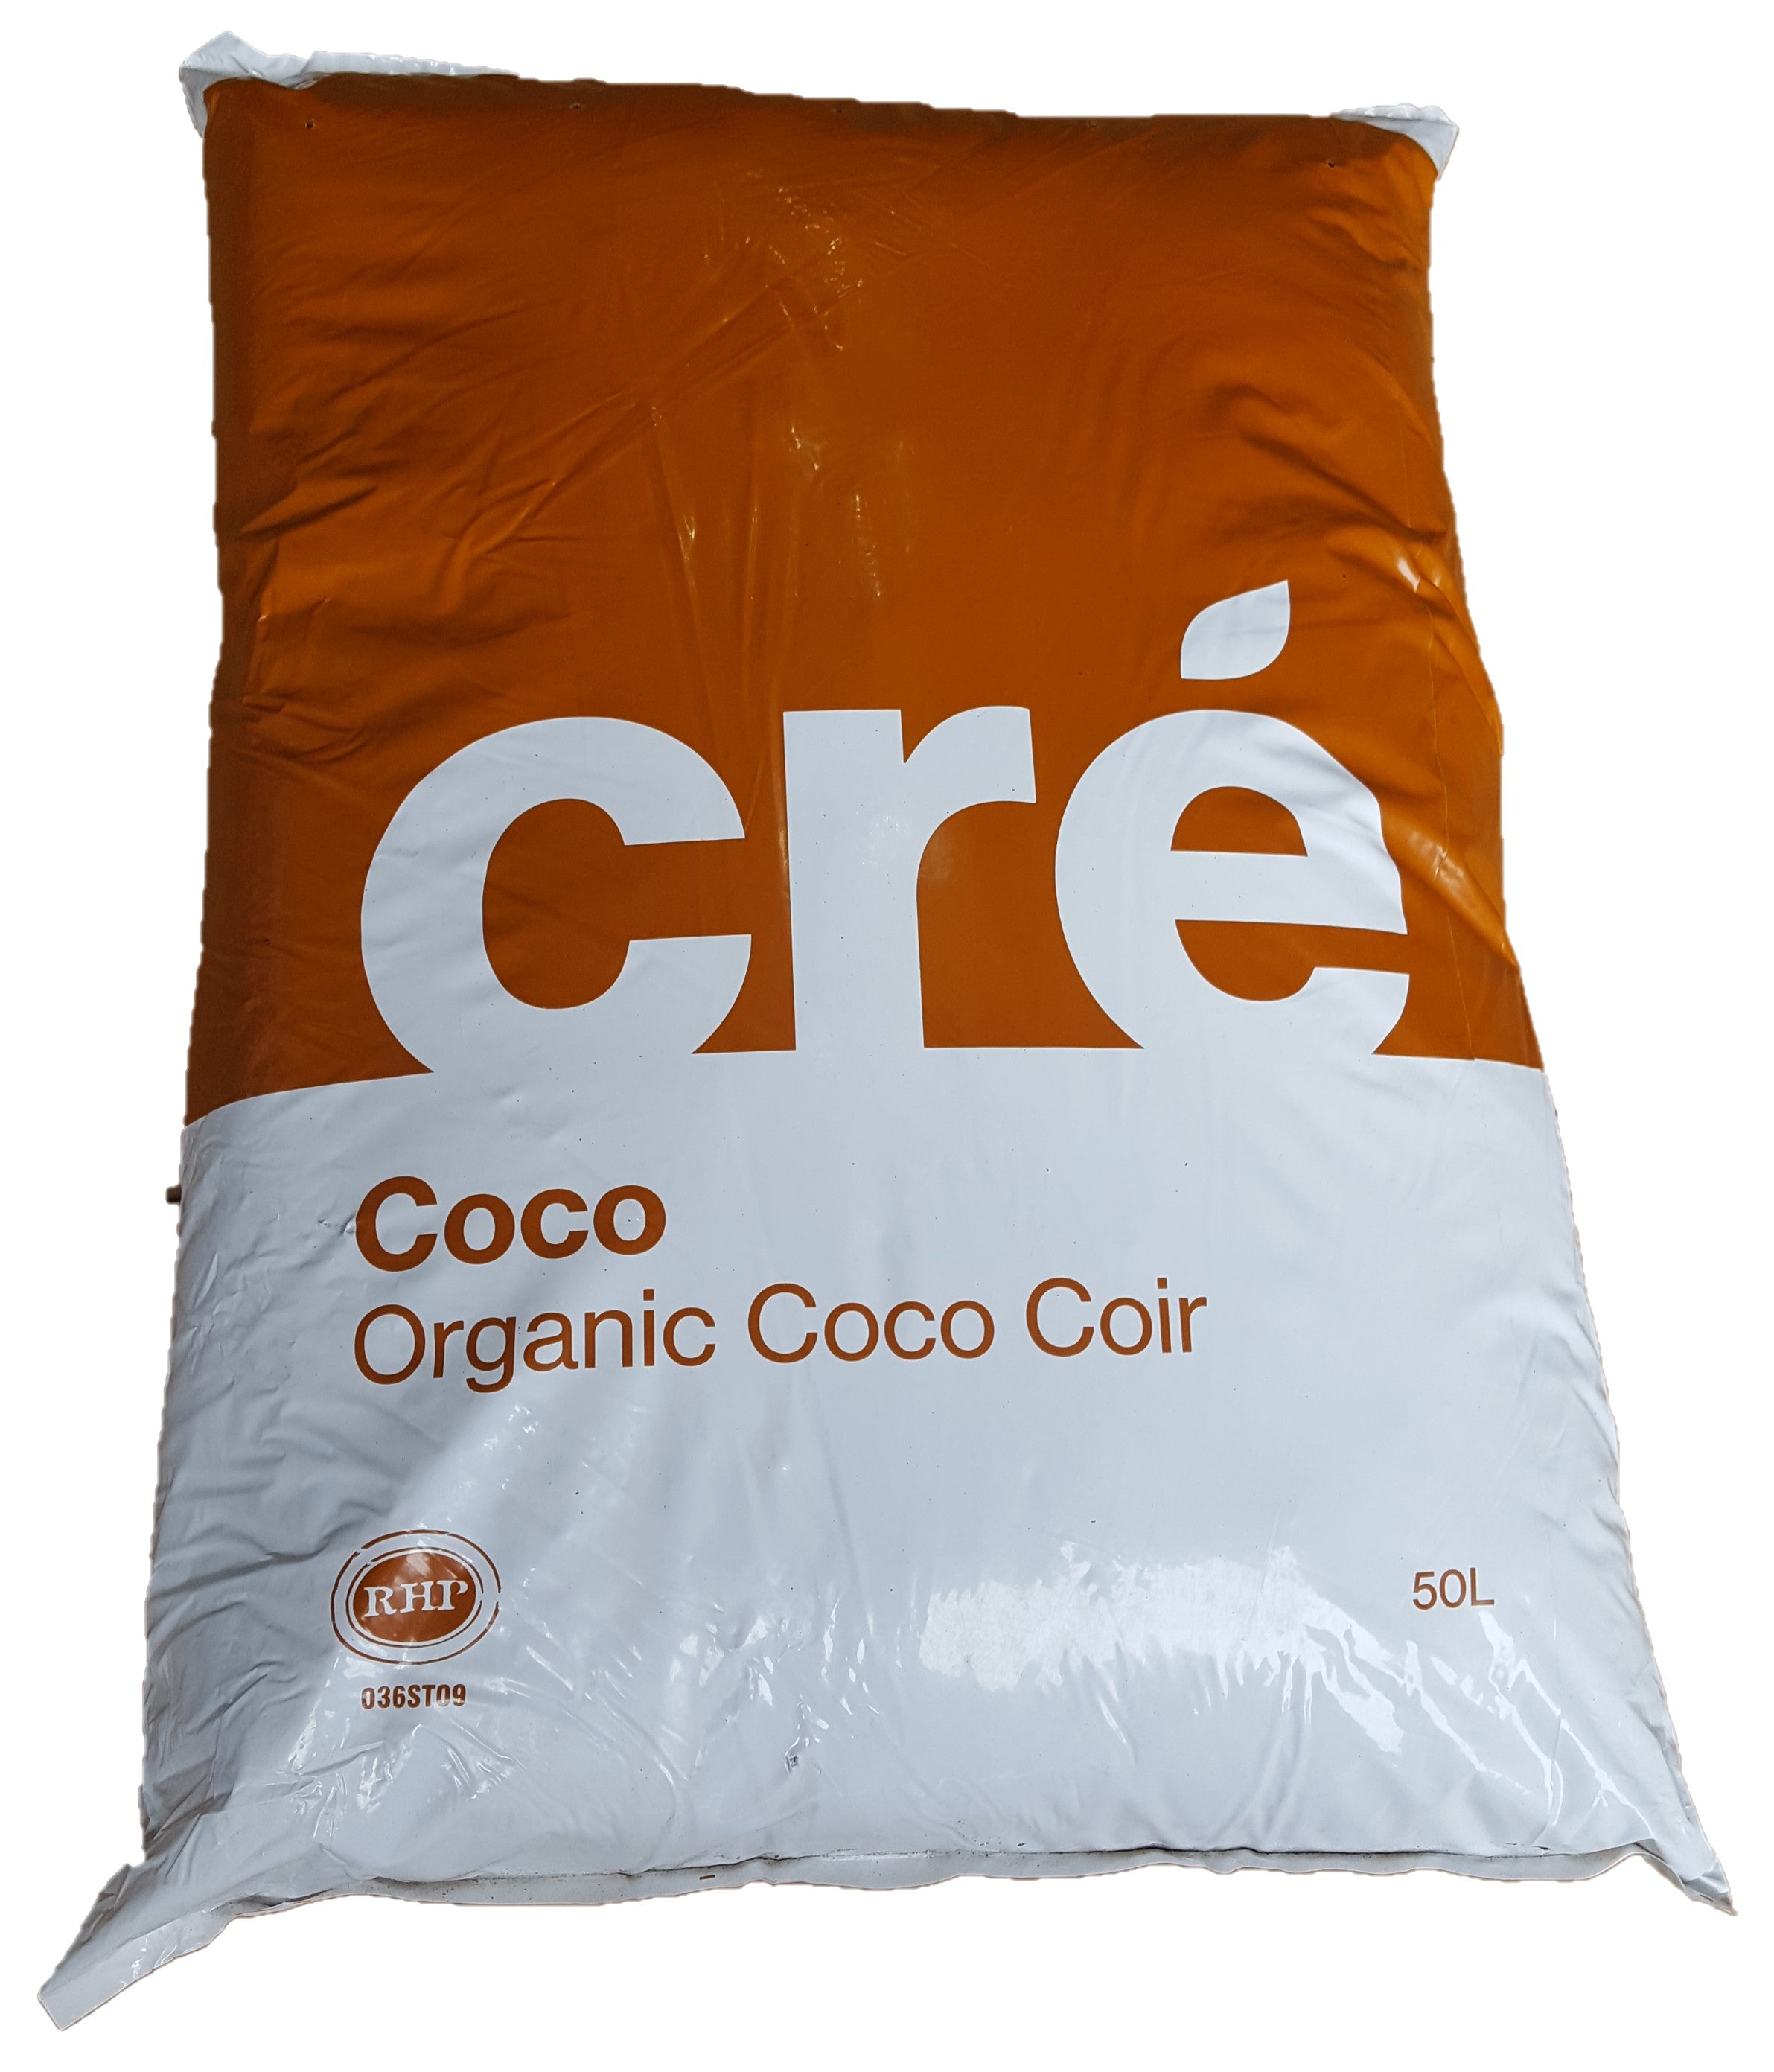 Cre Premium Coco 50 Liter